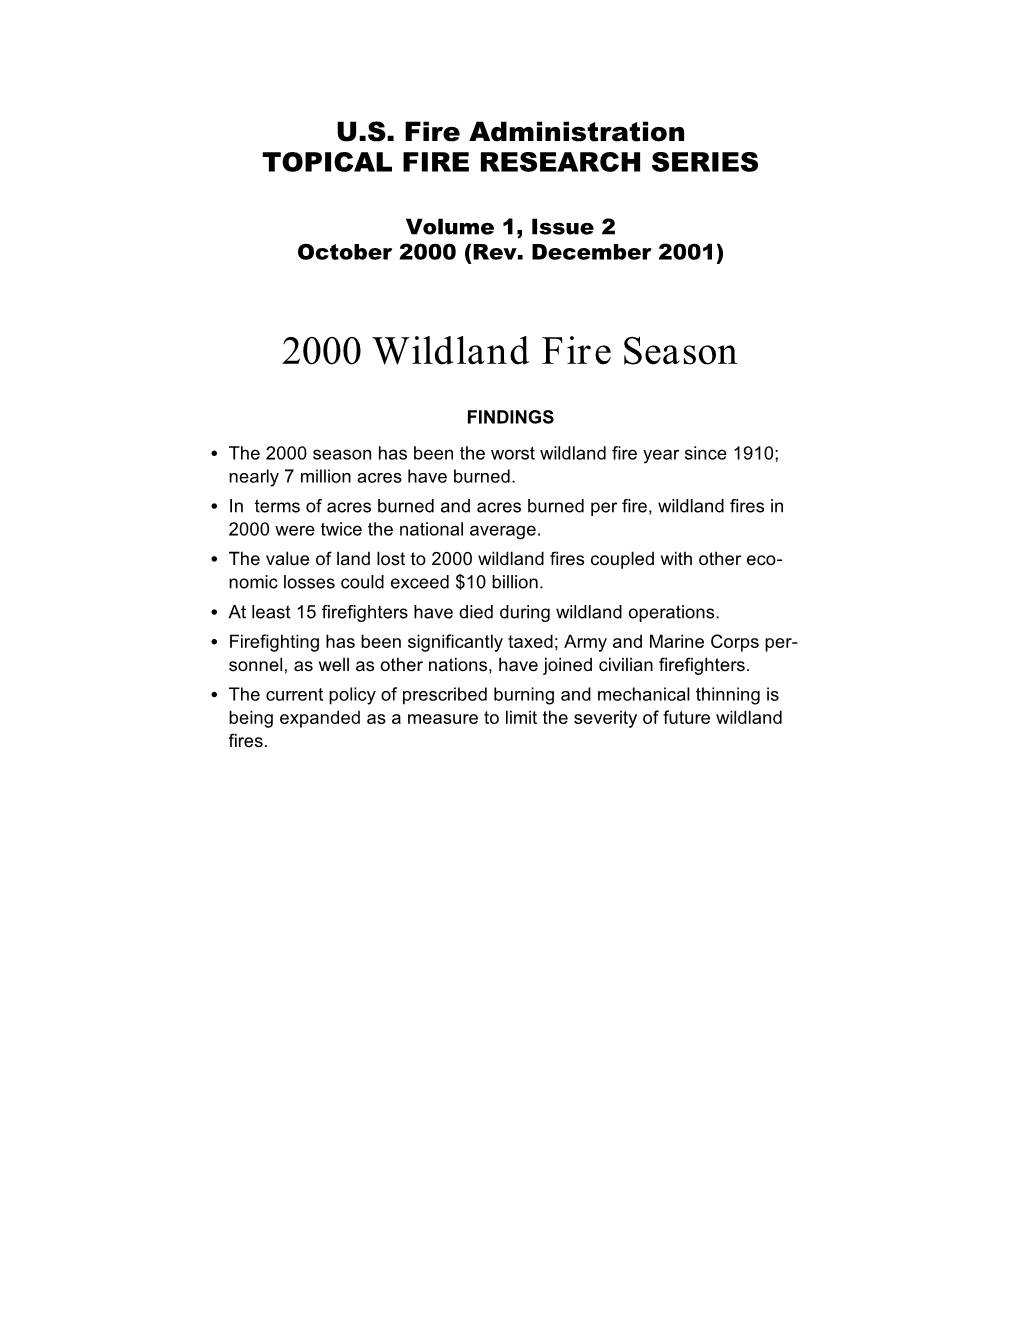 2000 Wildland Fire Season